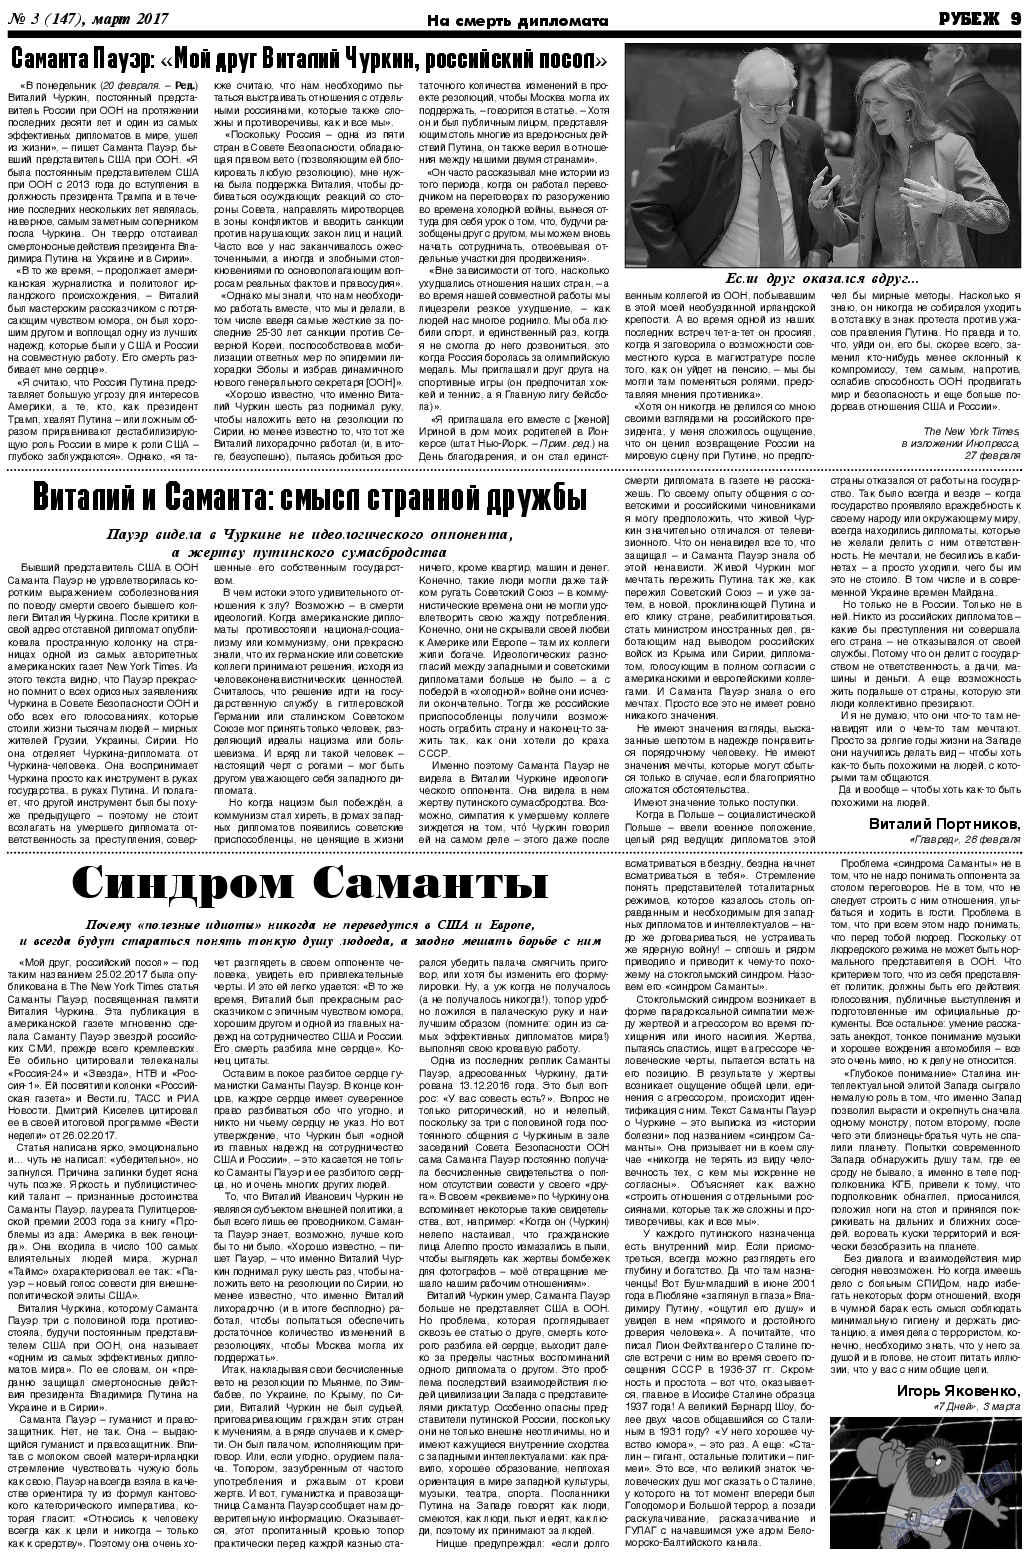 Рубеж, газета. 2017 №3 стр.9